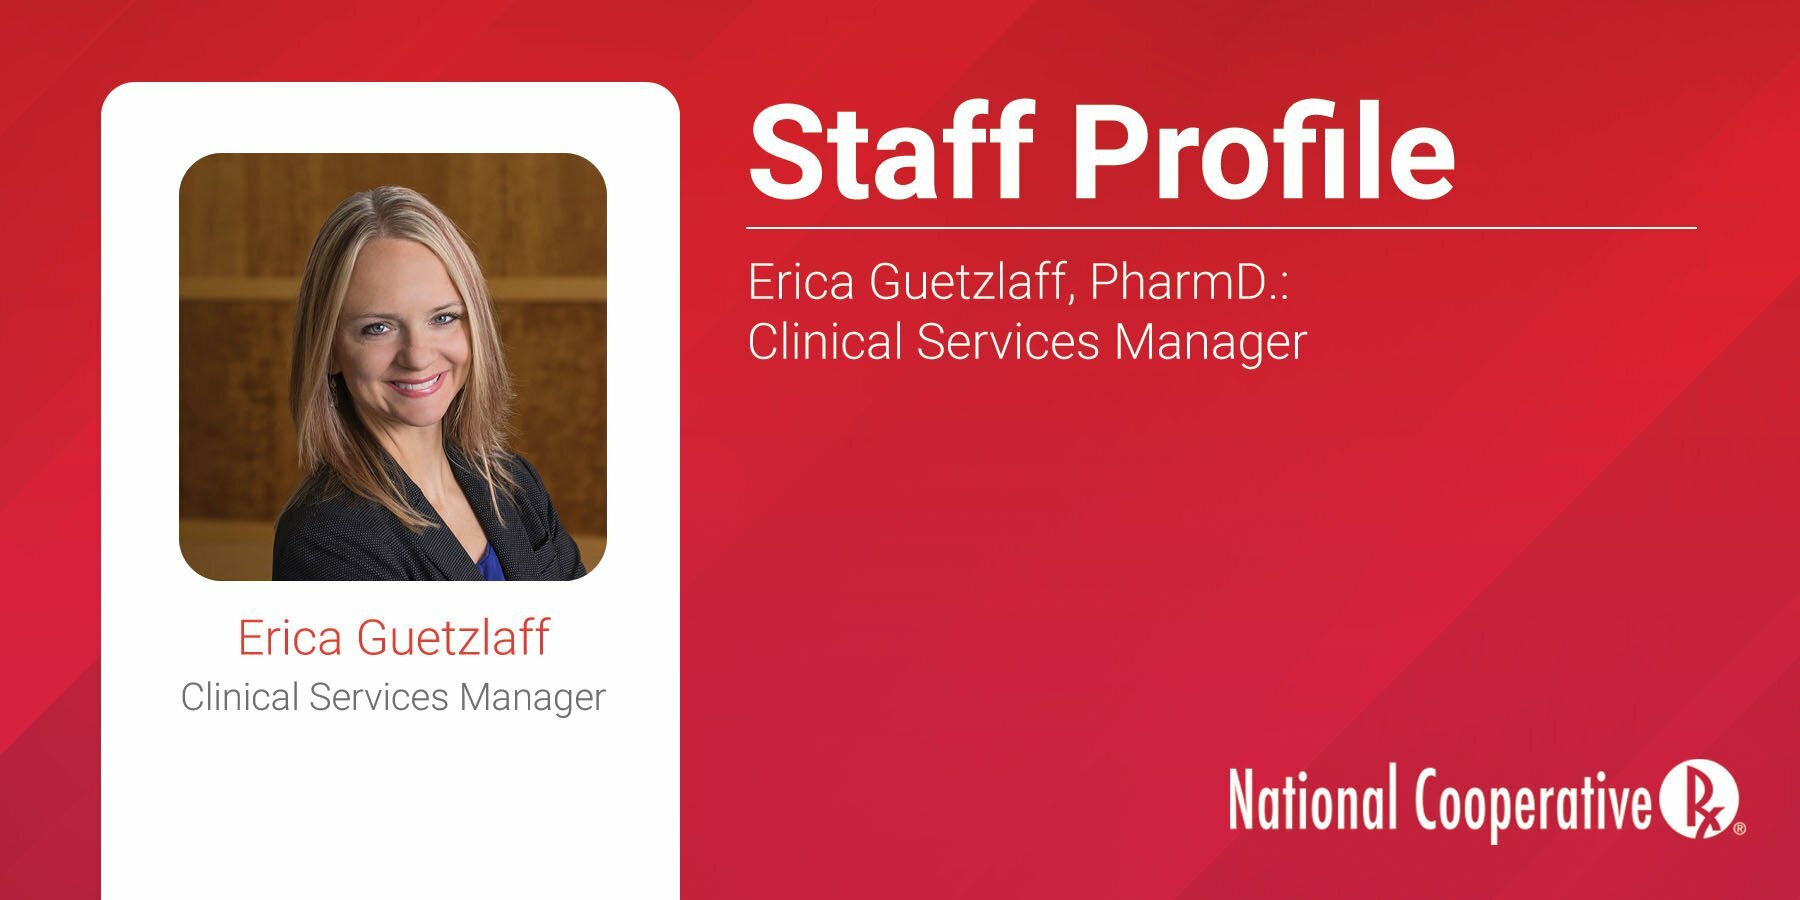 Staff Profile: Erica Guetzlaff